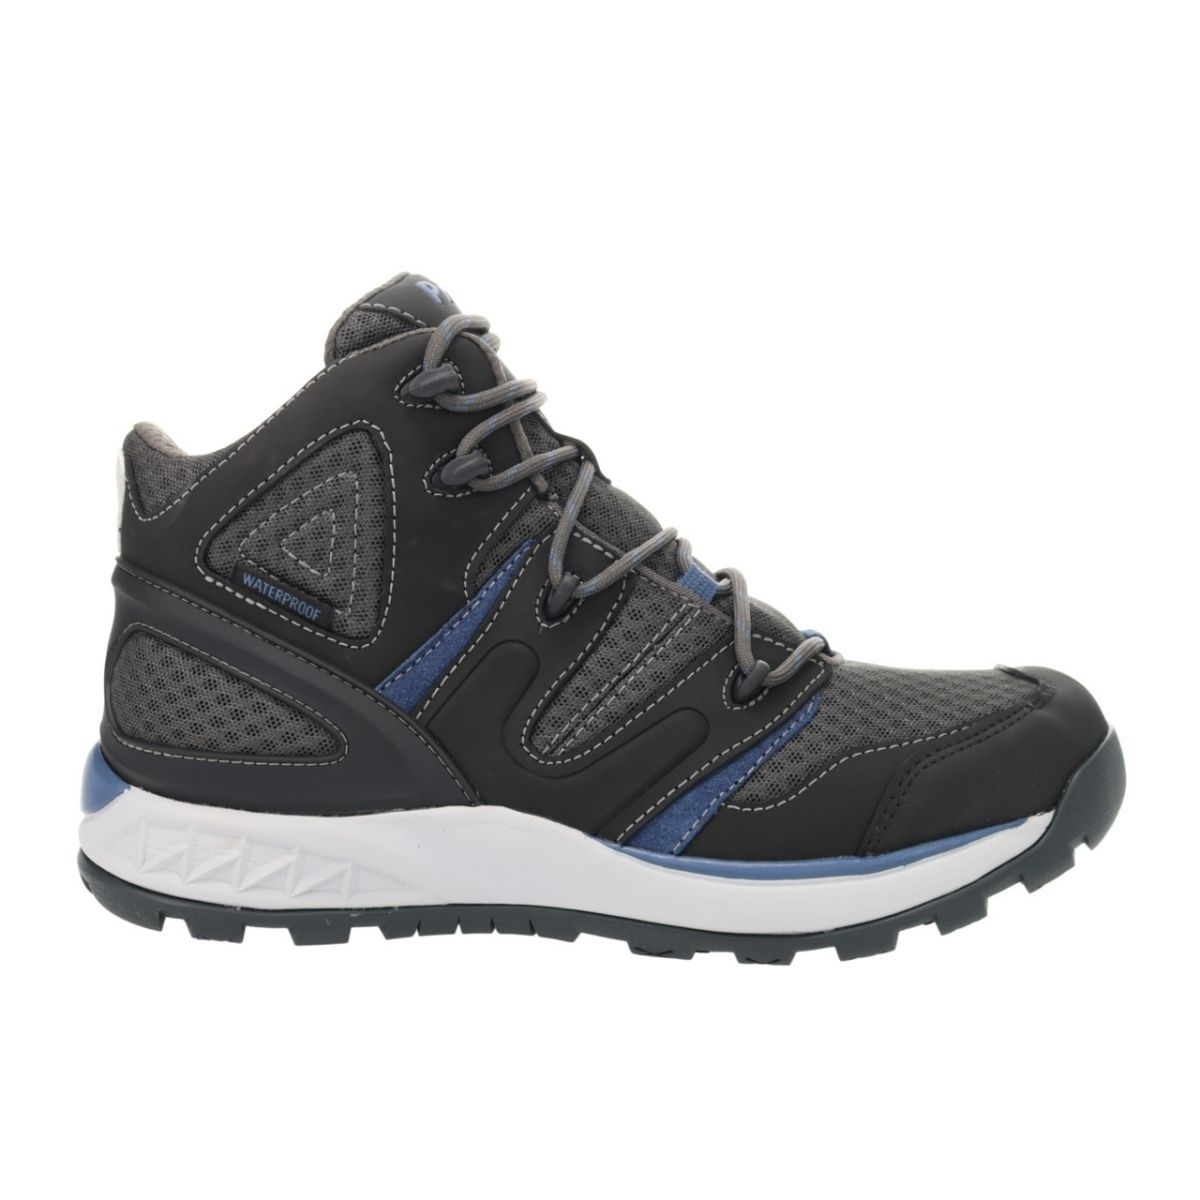 Propet Men's Veymont Waterproof Hiking Boot Grey/Blue - MOA022SGRB GREY/BLUE - GREY/BLUE, 13 XX-Wide